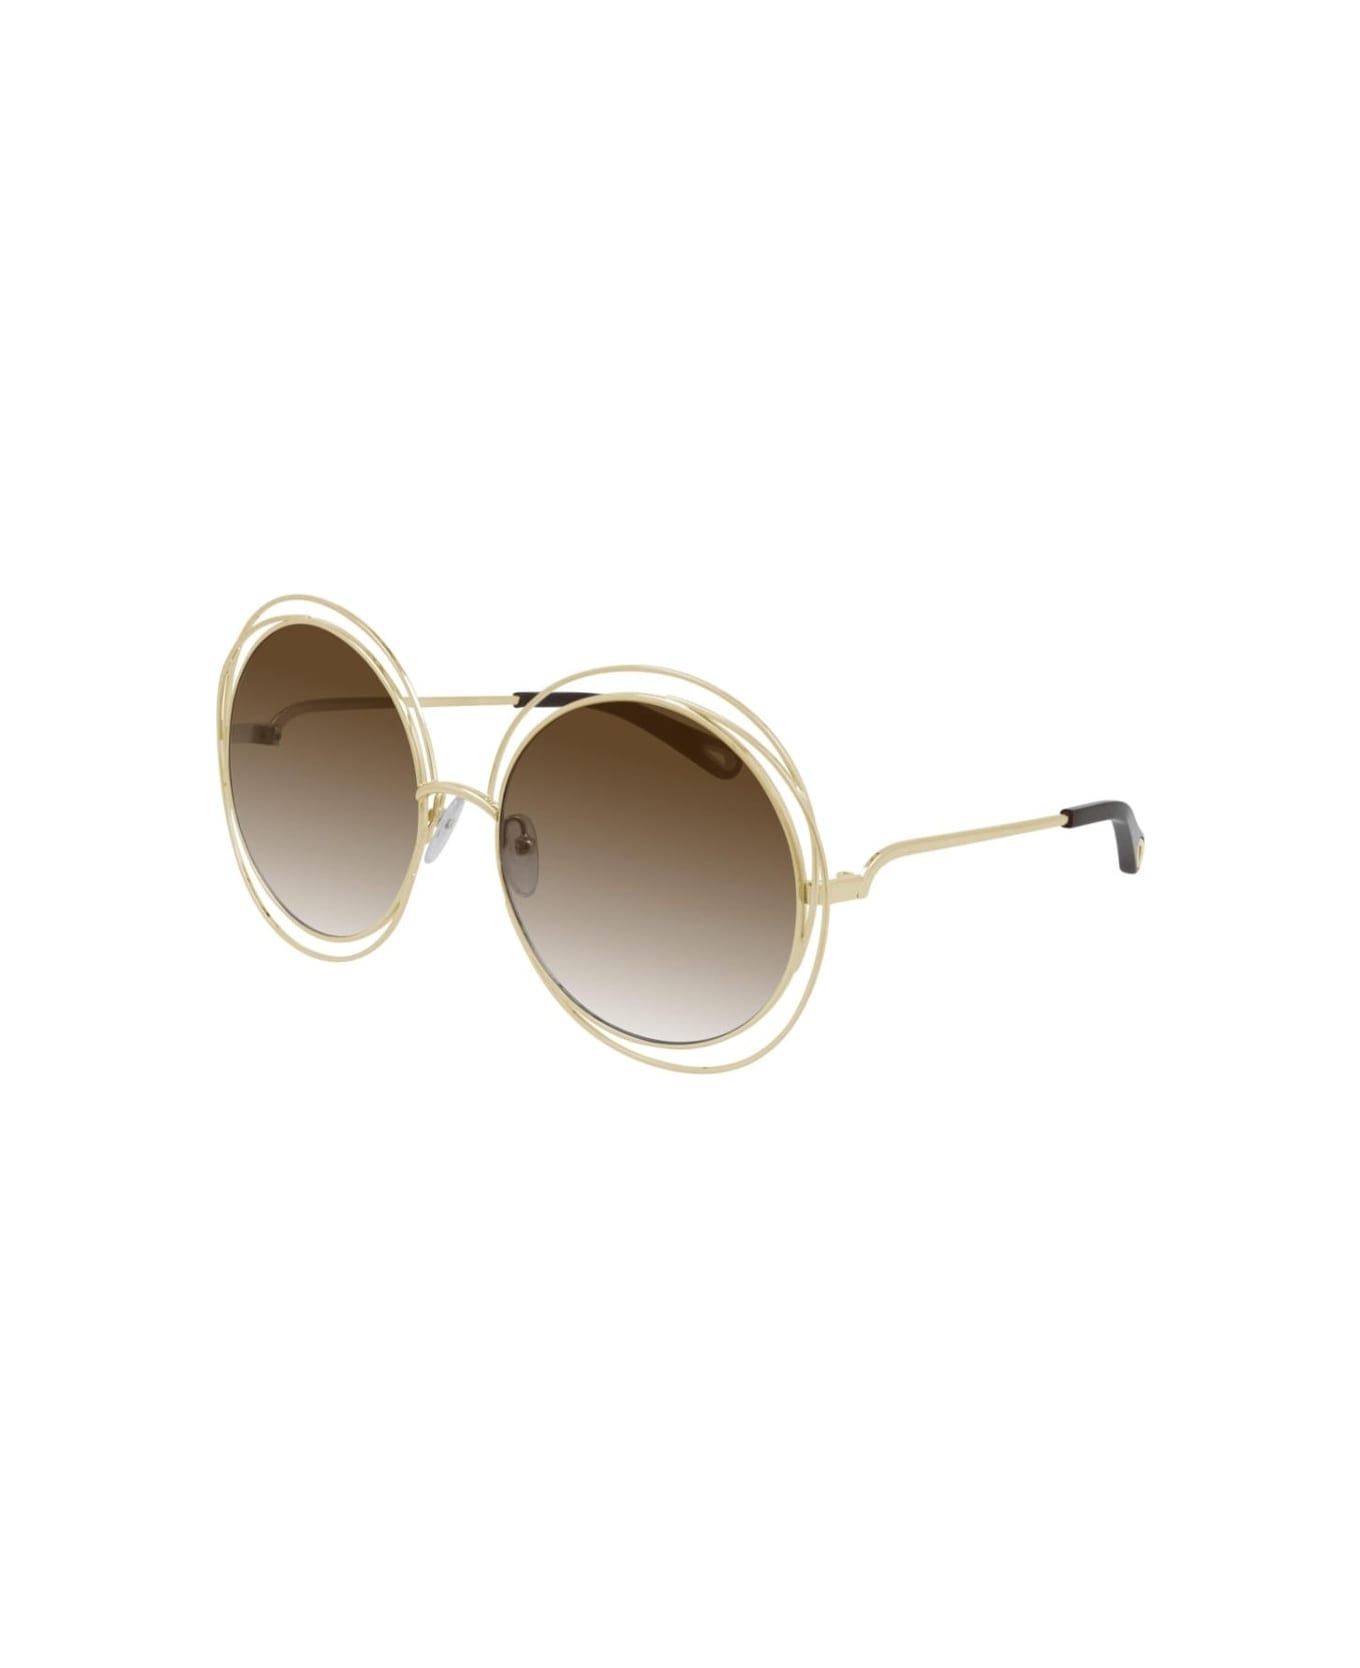 Chloé Eyewear CH0045s001 Sunglasses - Anya cat-eye frame sunglasses